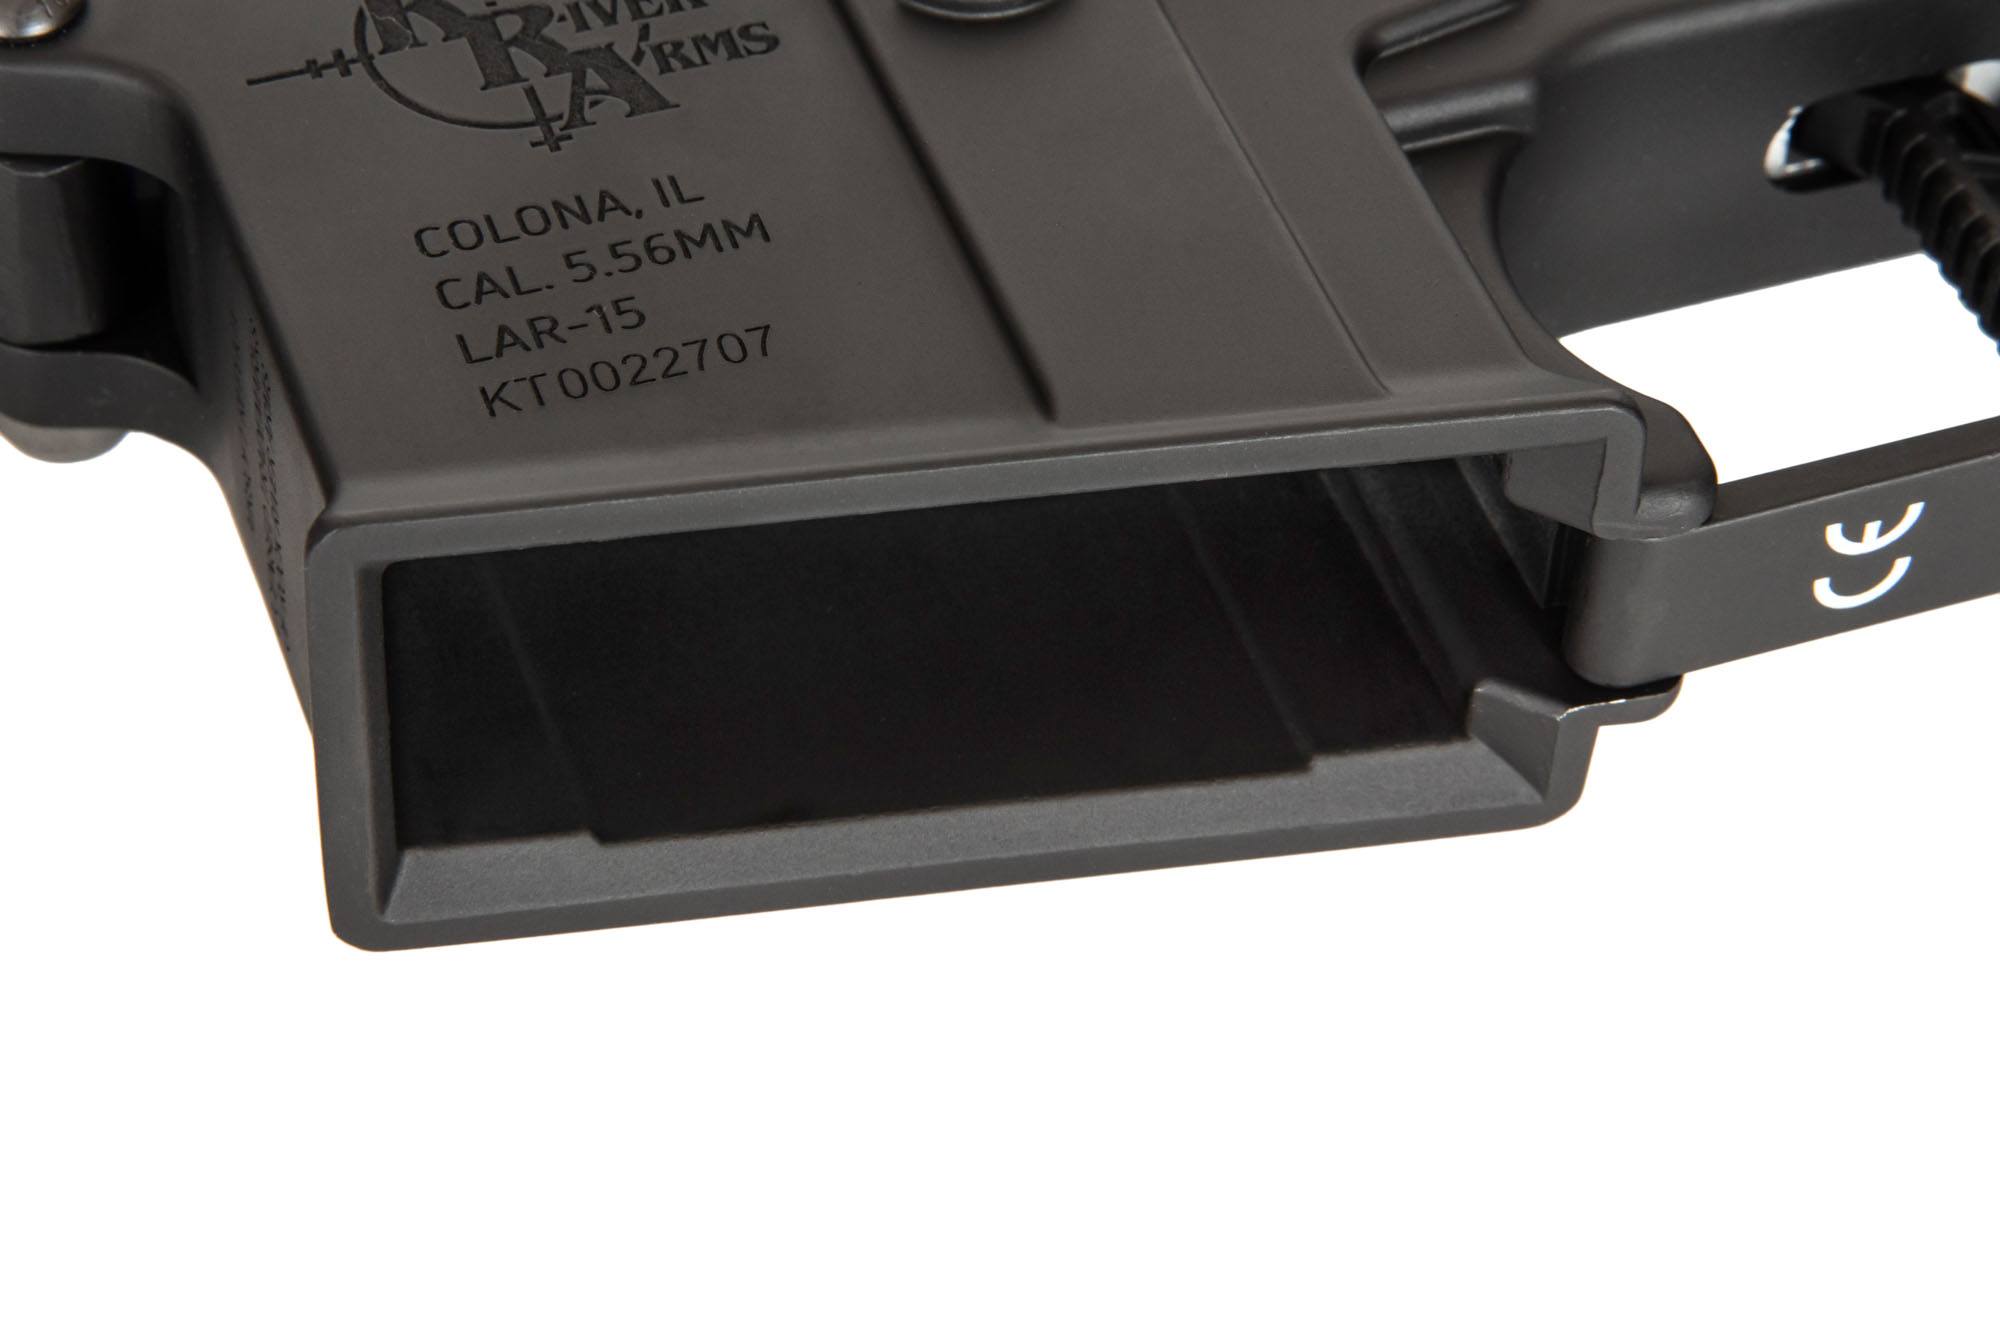 RRA SA-E07 EDGE ™ 2.0 Carbine Replica - Half-Tan by Specna Arms on Airsoft Mania Europe